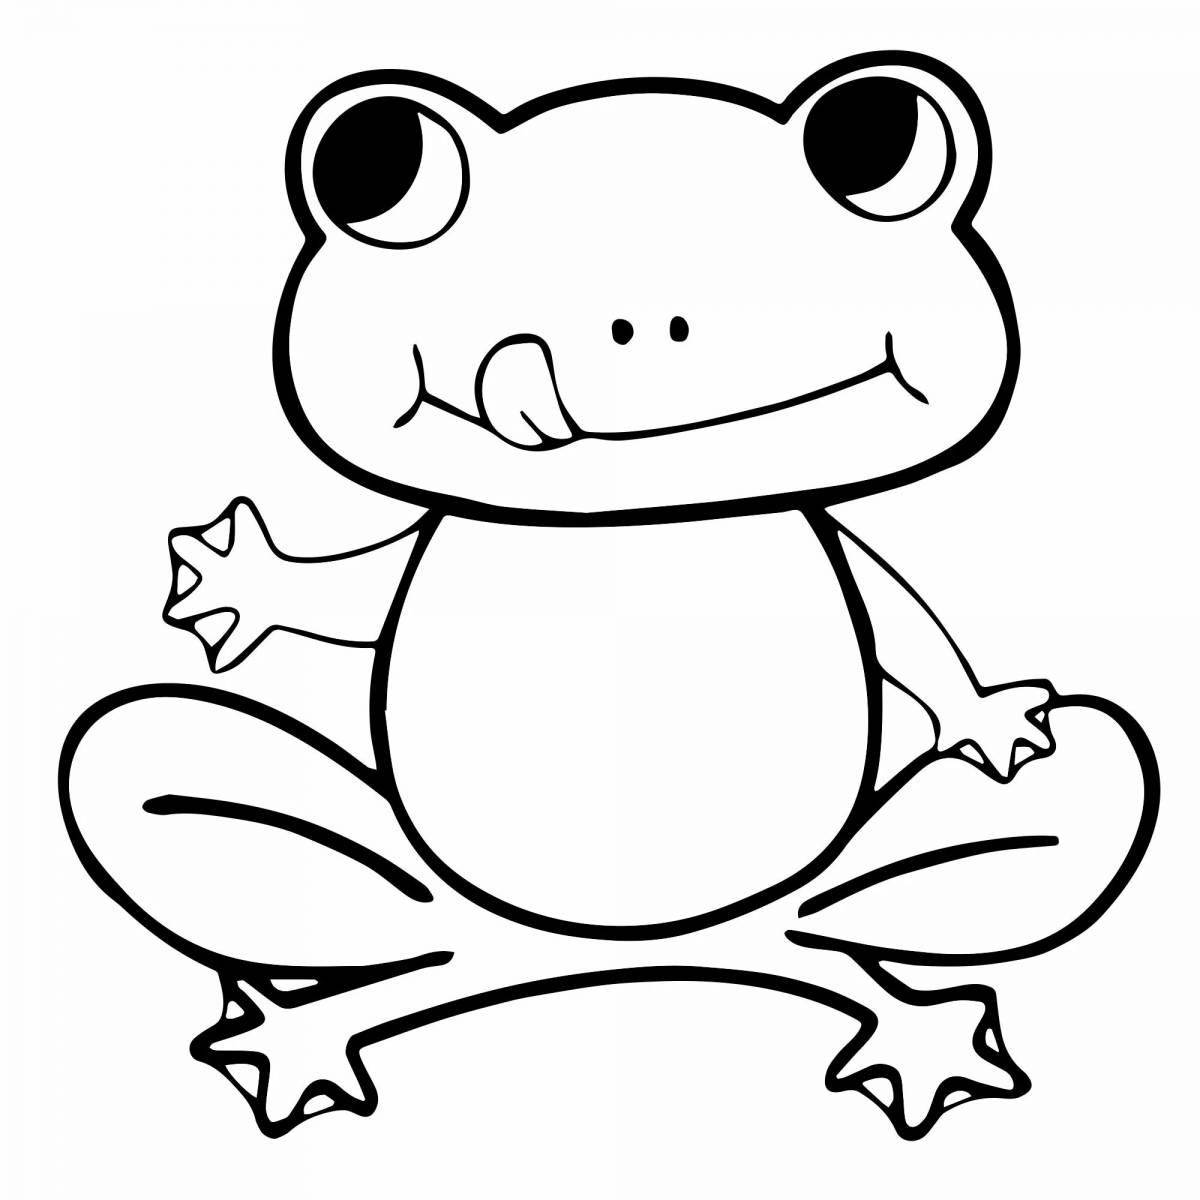 Bright frog teremok coloring book